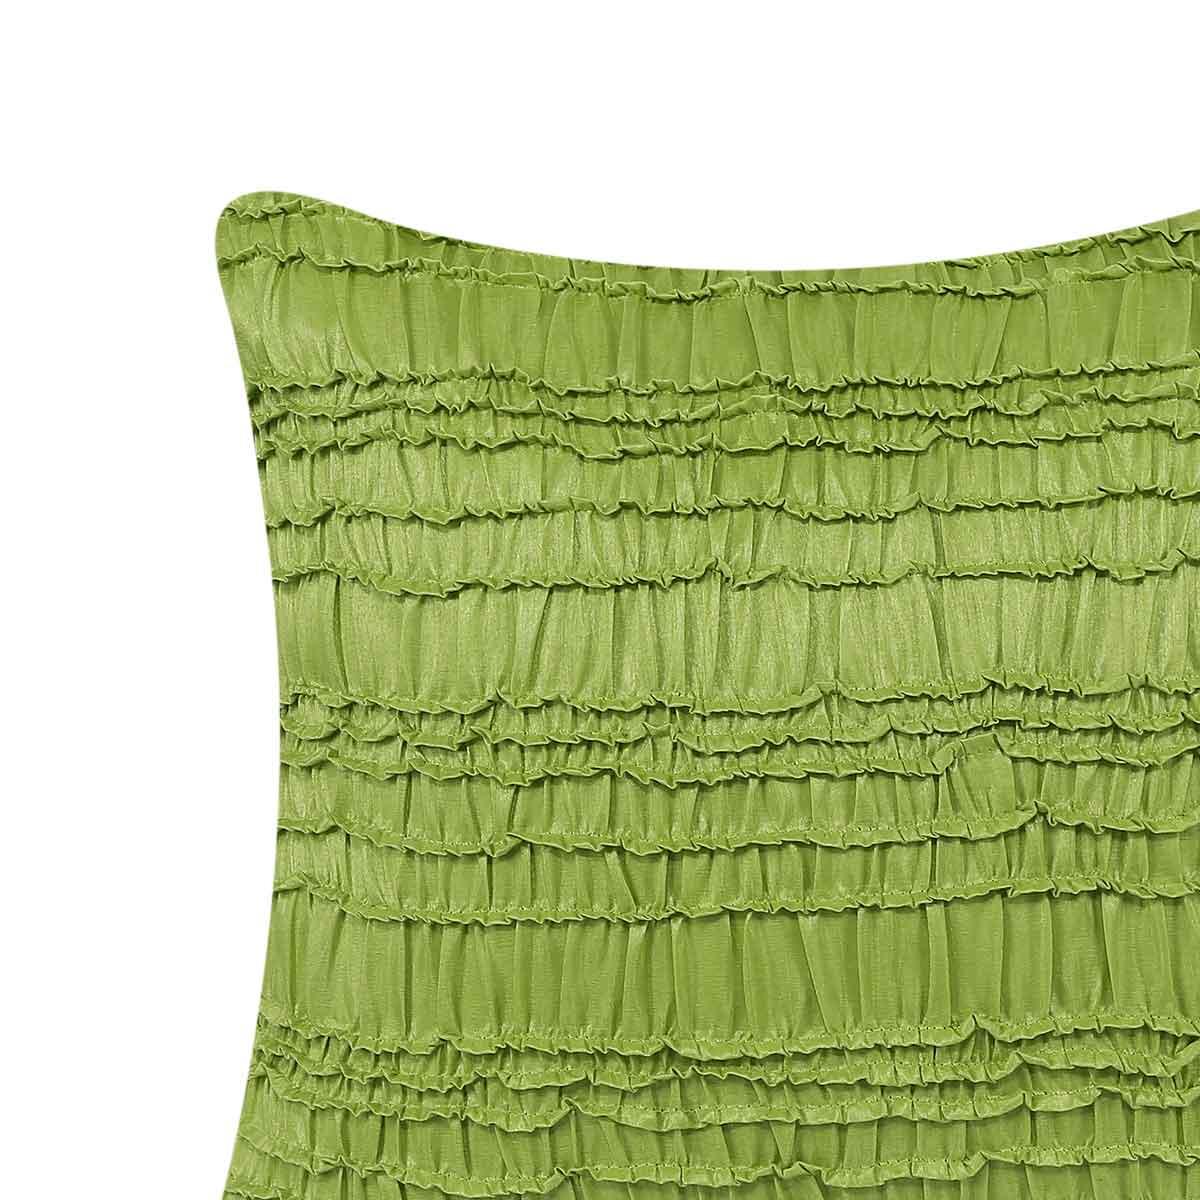 Tan 20 In X 20 In Green Cushion Cover - Home4u